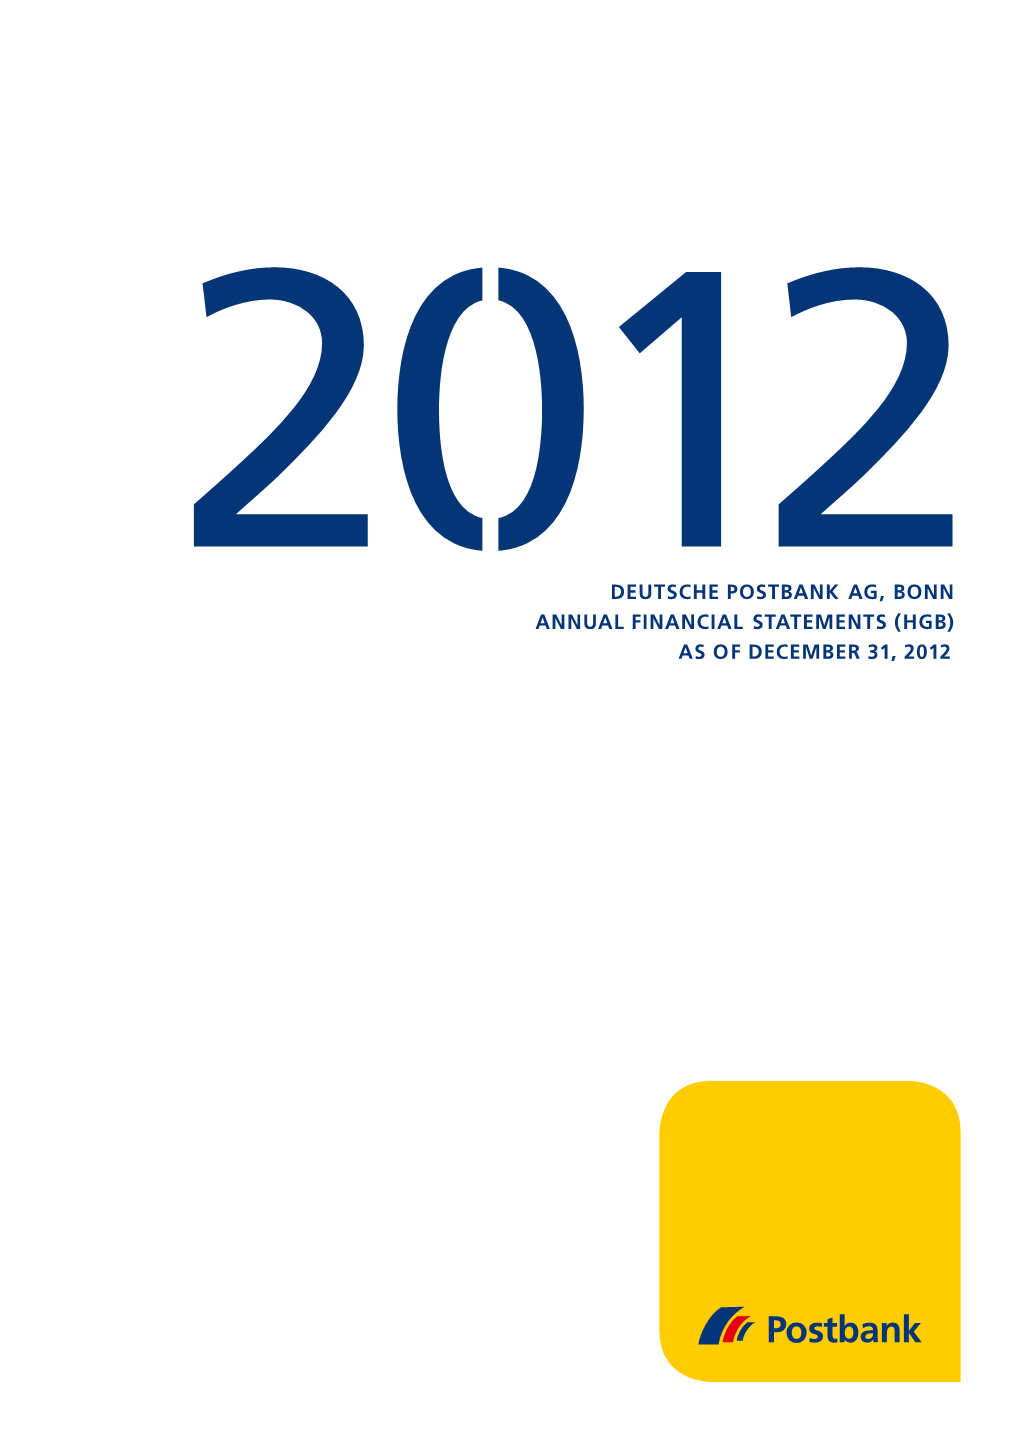 Deutsche Postbank AG, Bonn Annual Financial Statements (HGB) As of December 31, 2012